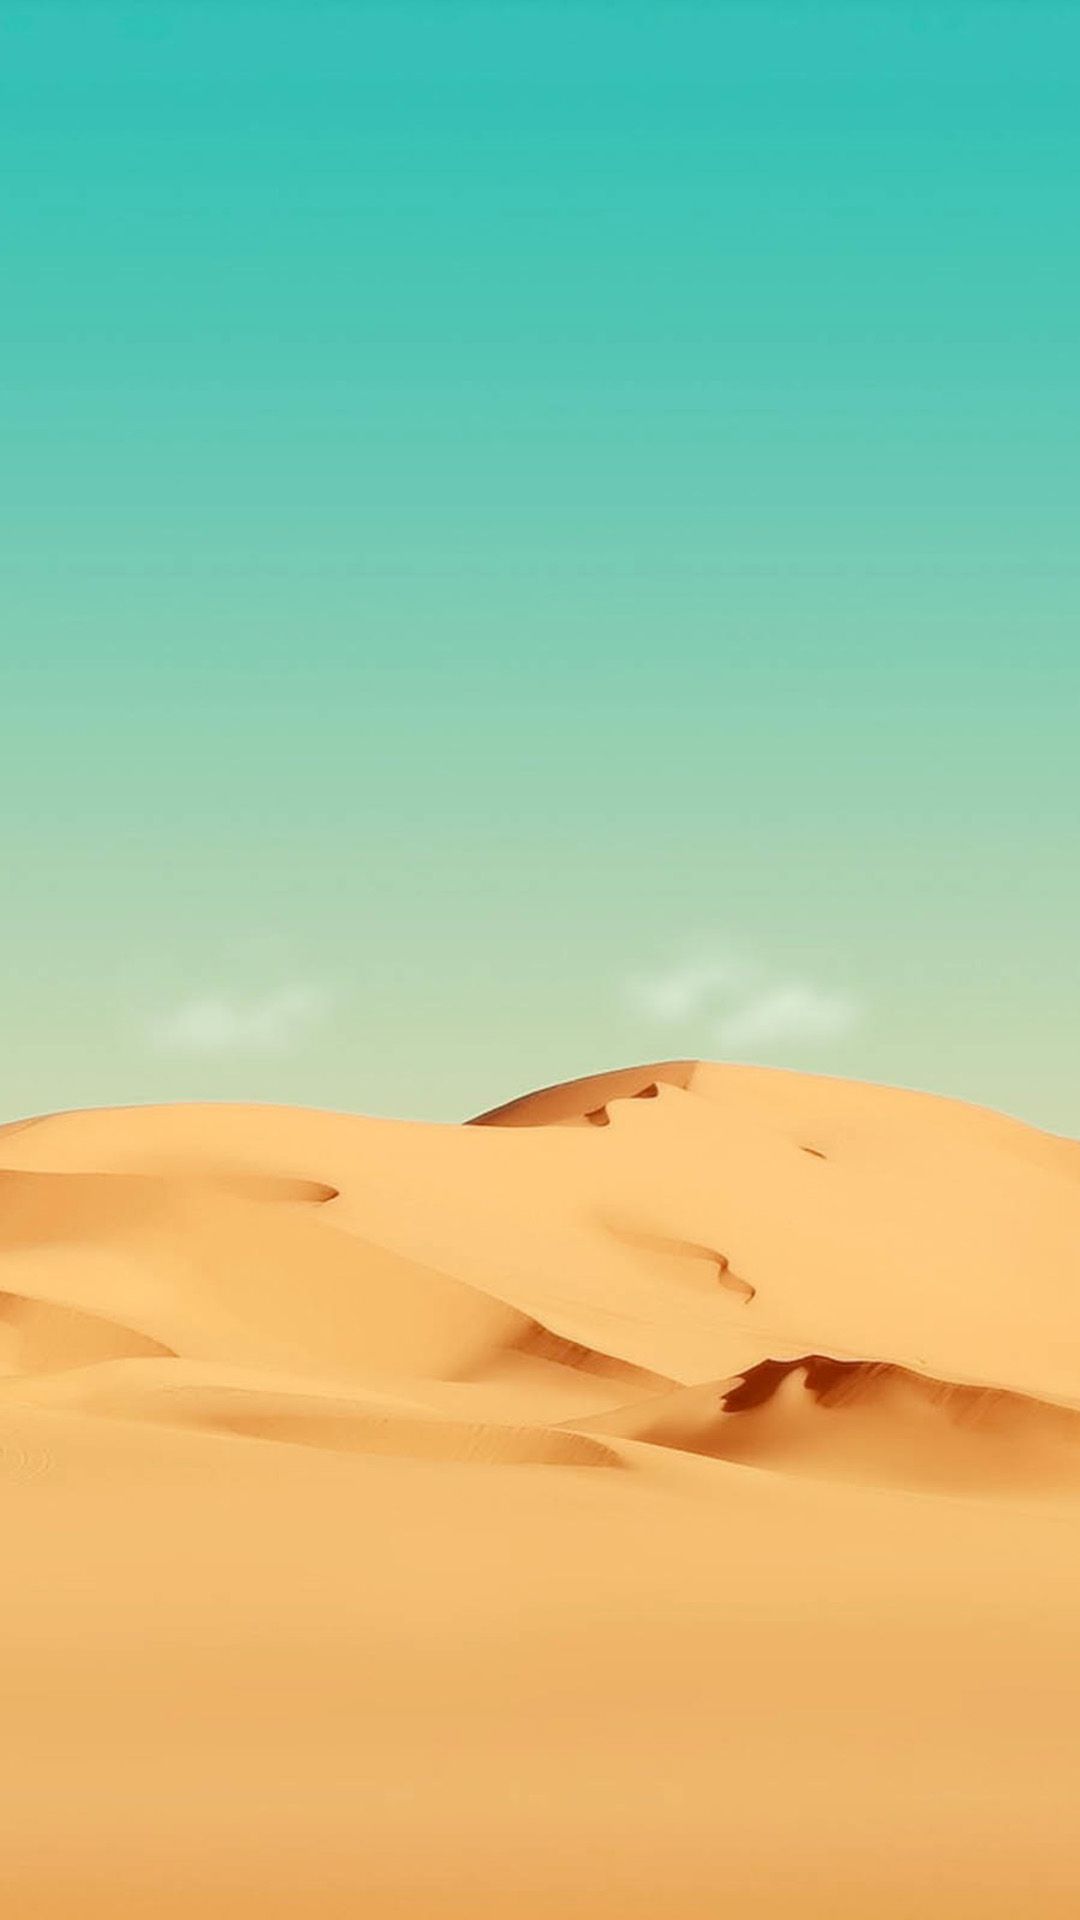 best cell phone wallpaper,desert,erg,sand,natural environment,aeolian landform